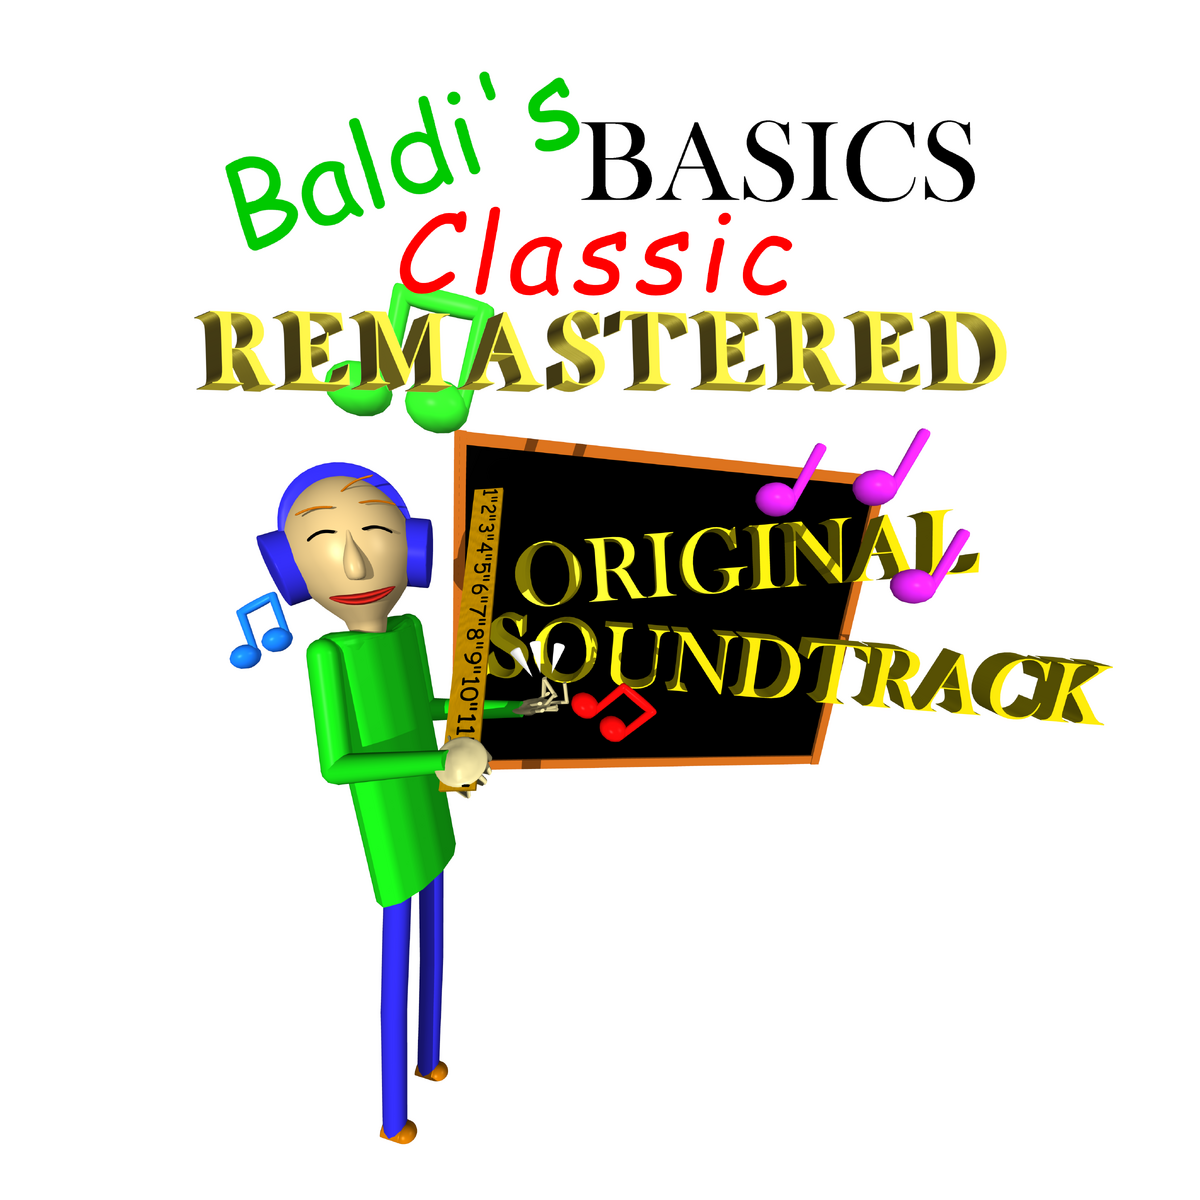 How to download Baldi's Basics?